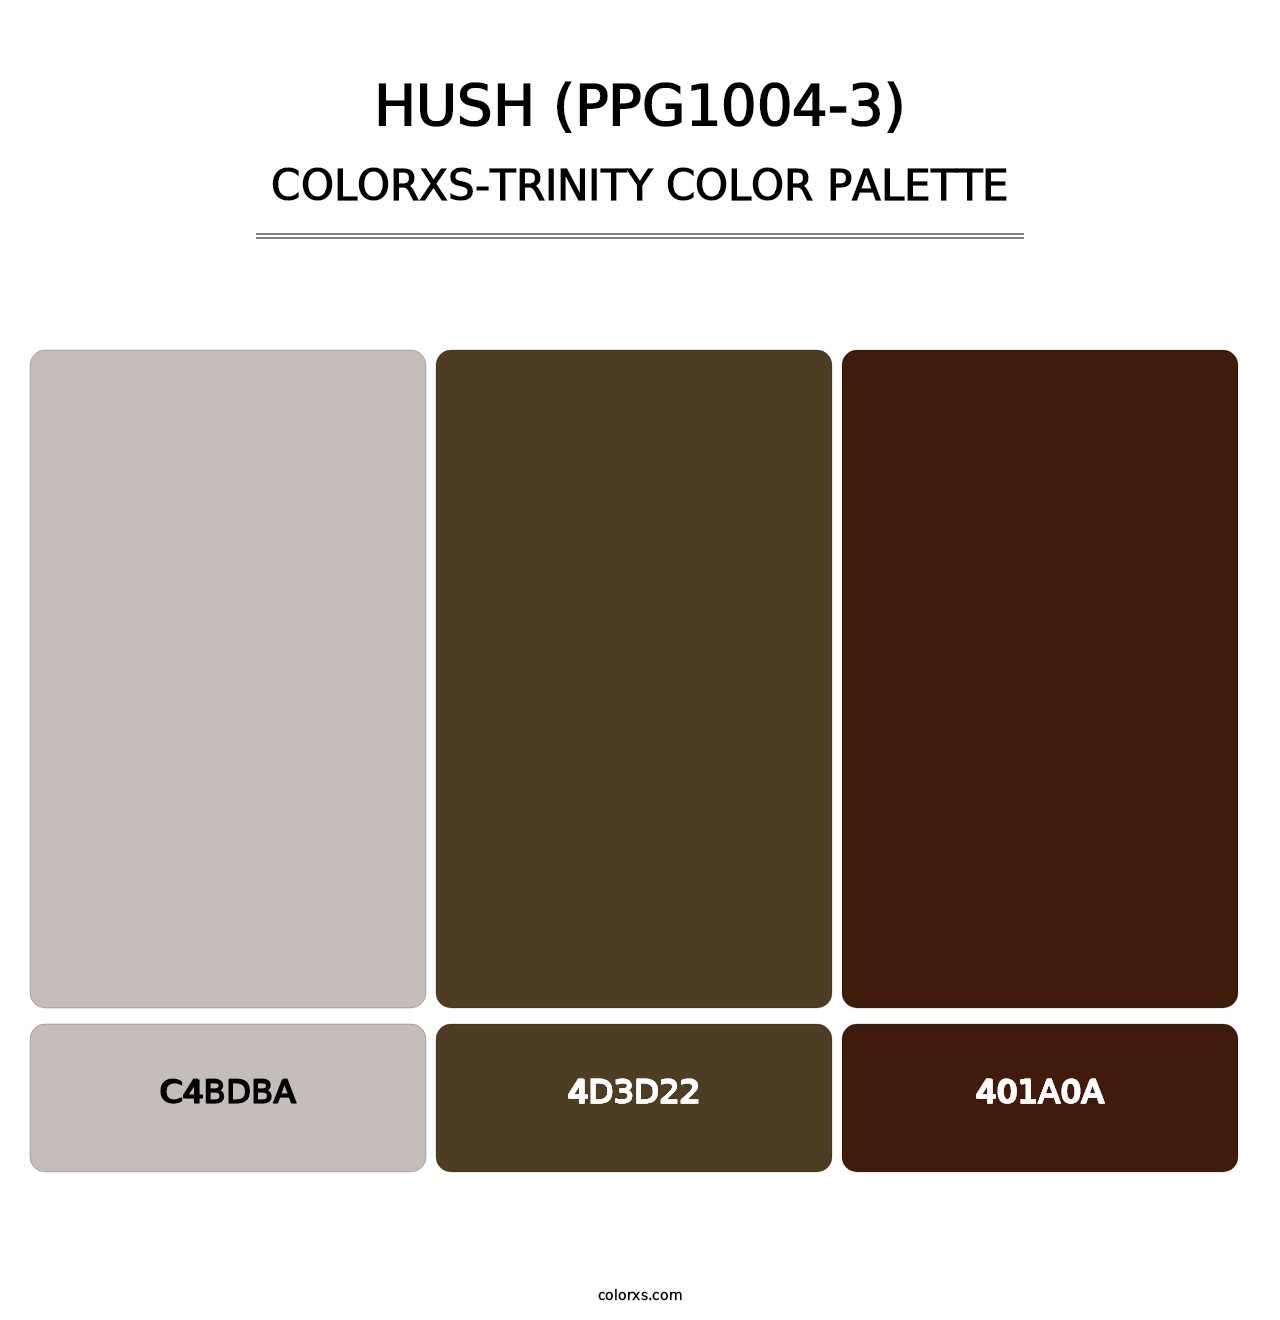 Hush (PPG1004-3) - Colorxs Trinity Palette